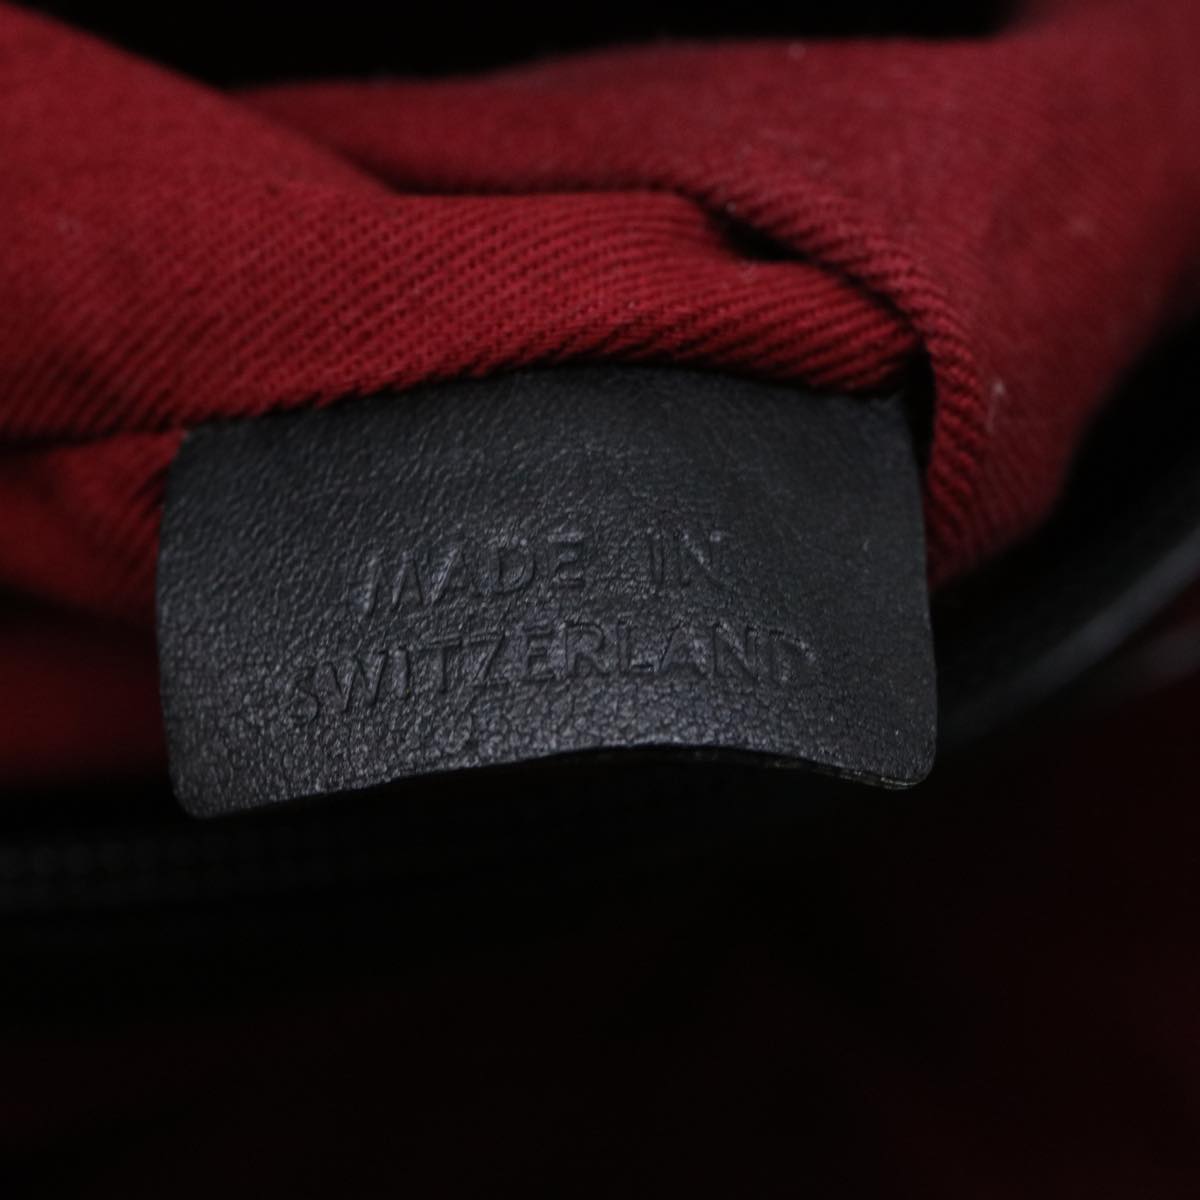 BALLY Shoulder Bag Leather Black Auth ar8215